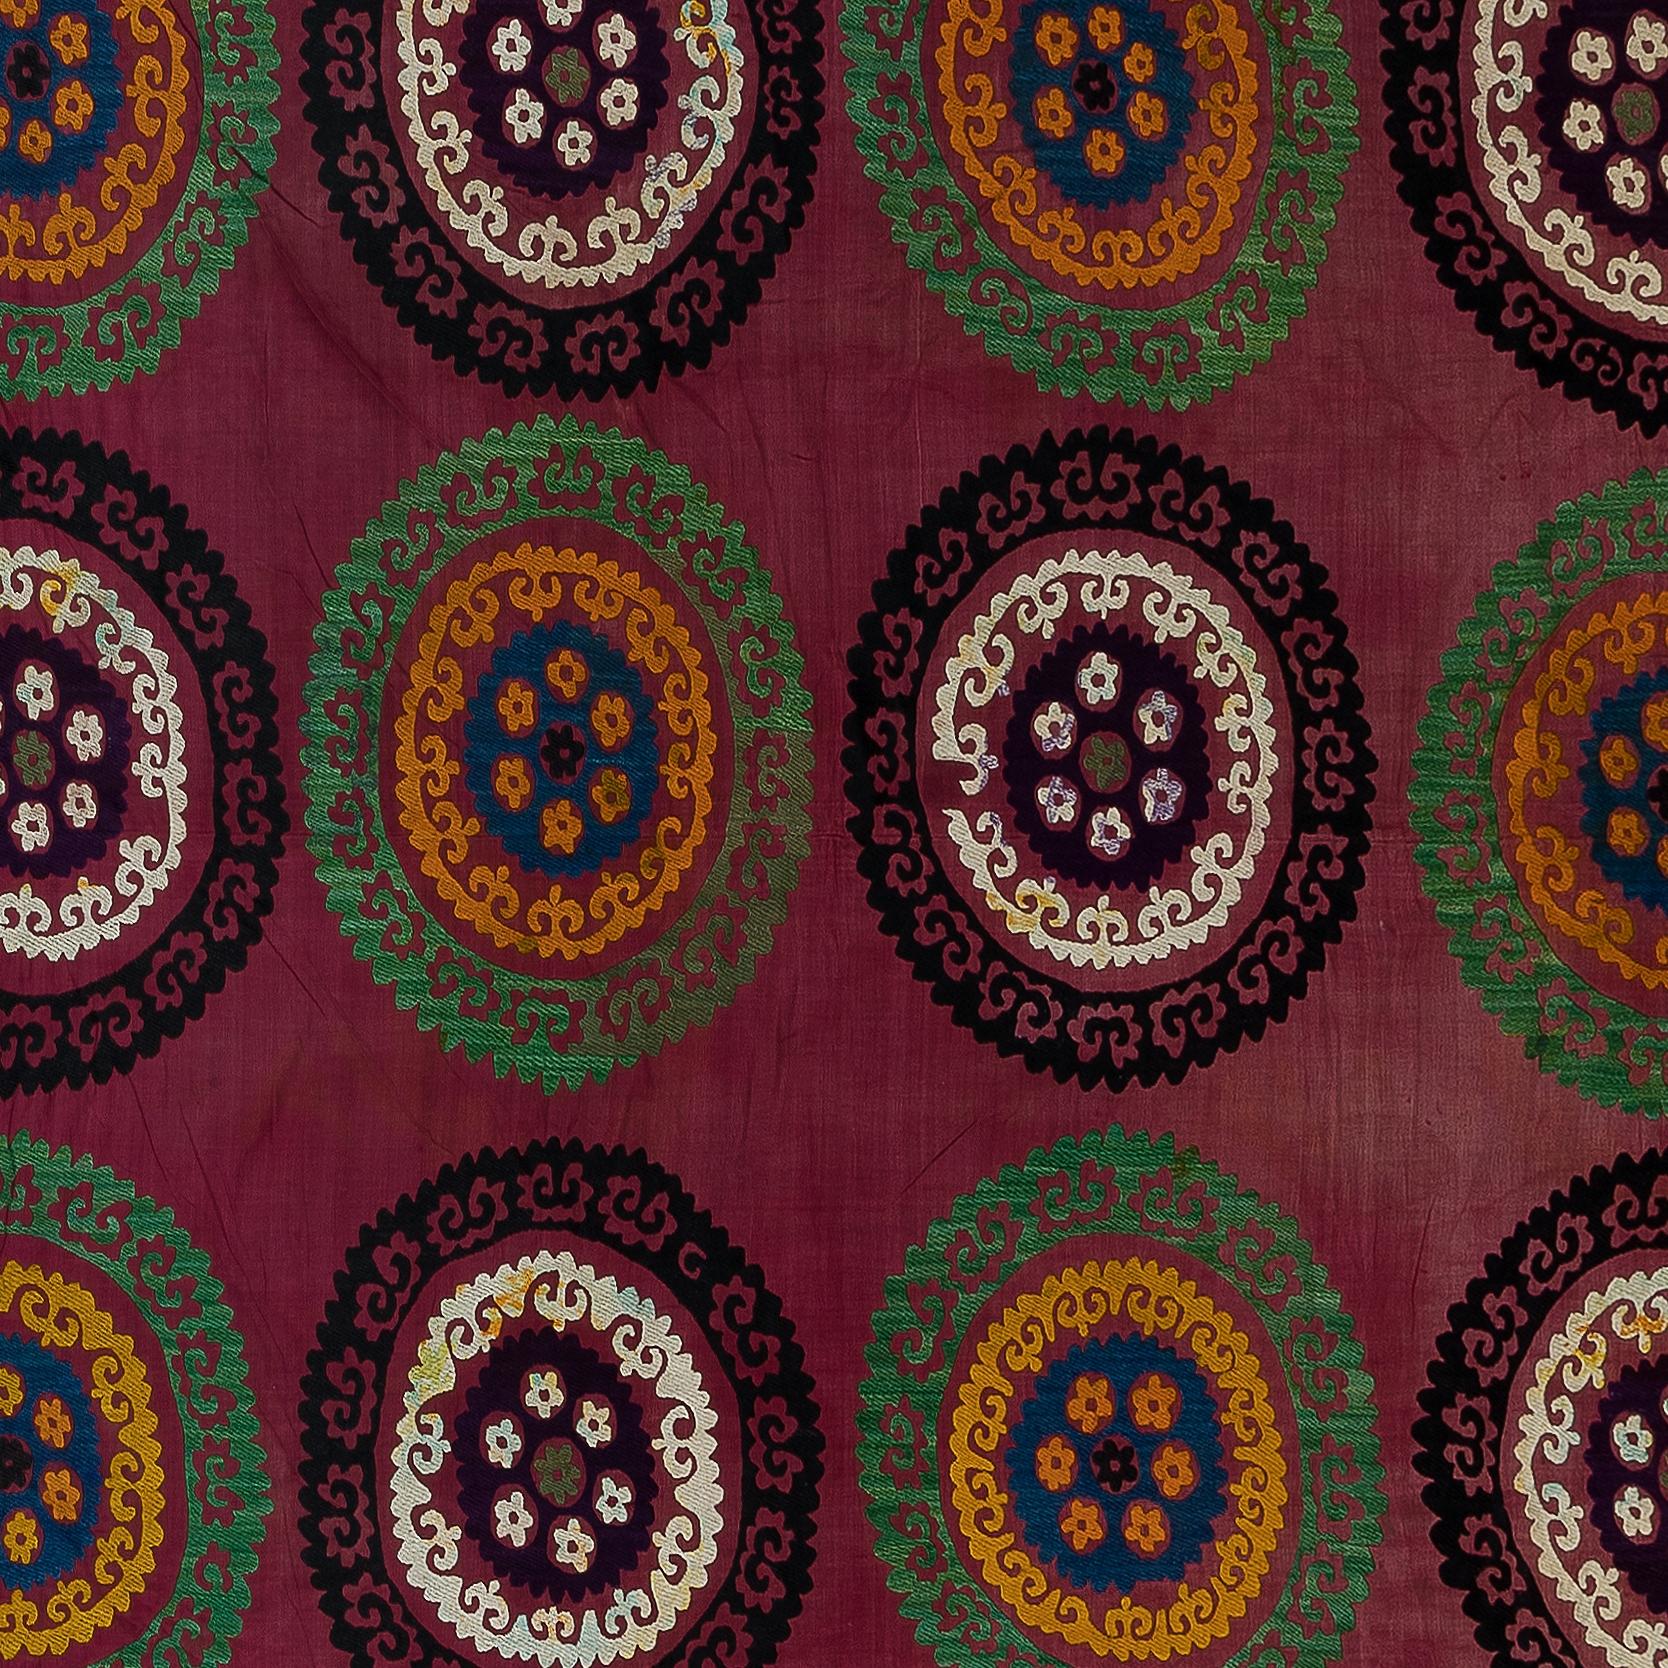 Uzbek 7.7x8.7 Ft Vintage Silk Embroidery Bedspread, Unique Burgundy Red Tablecloth For Sale